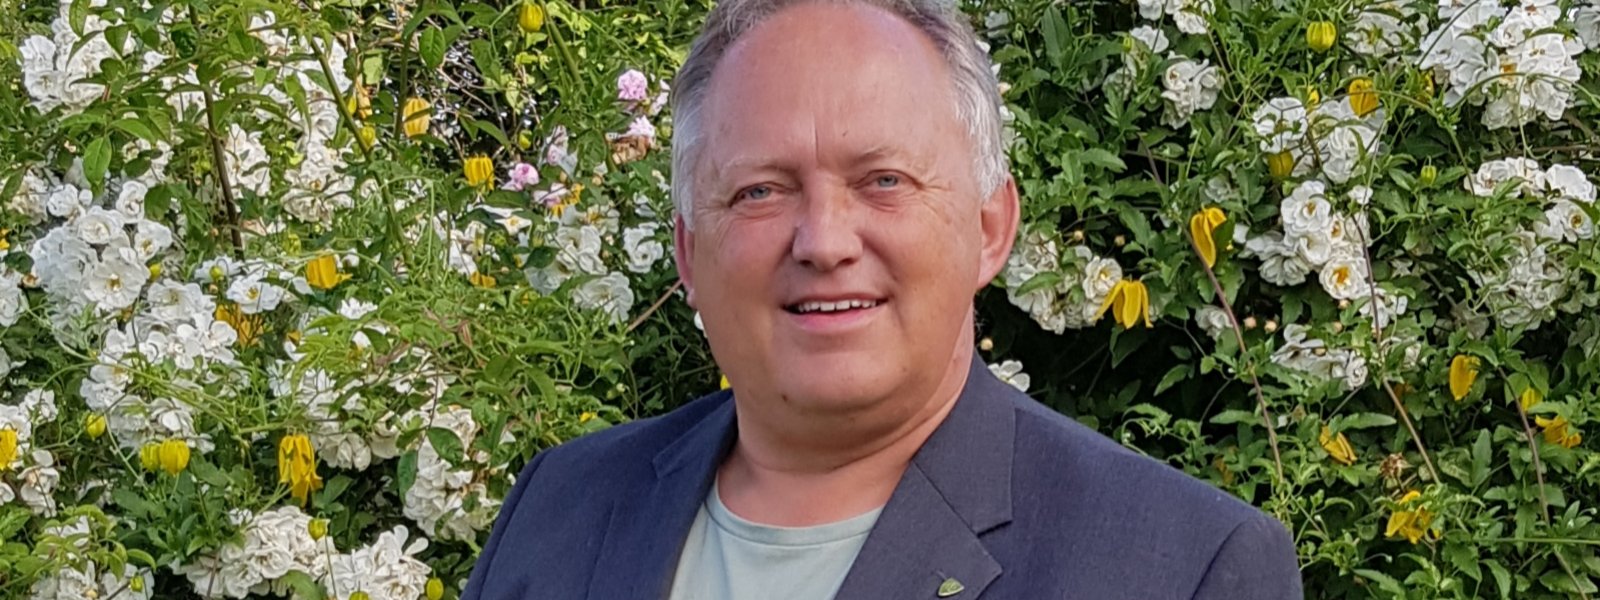 Bilde ordfører profil 2019